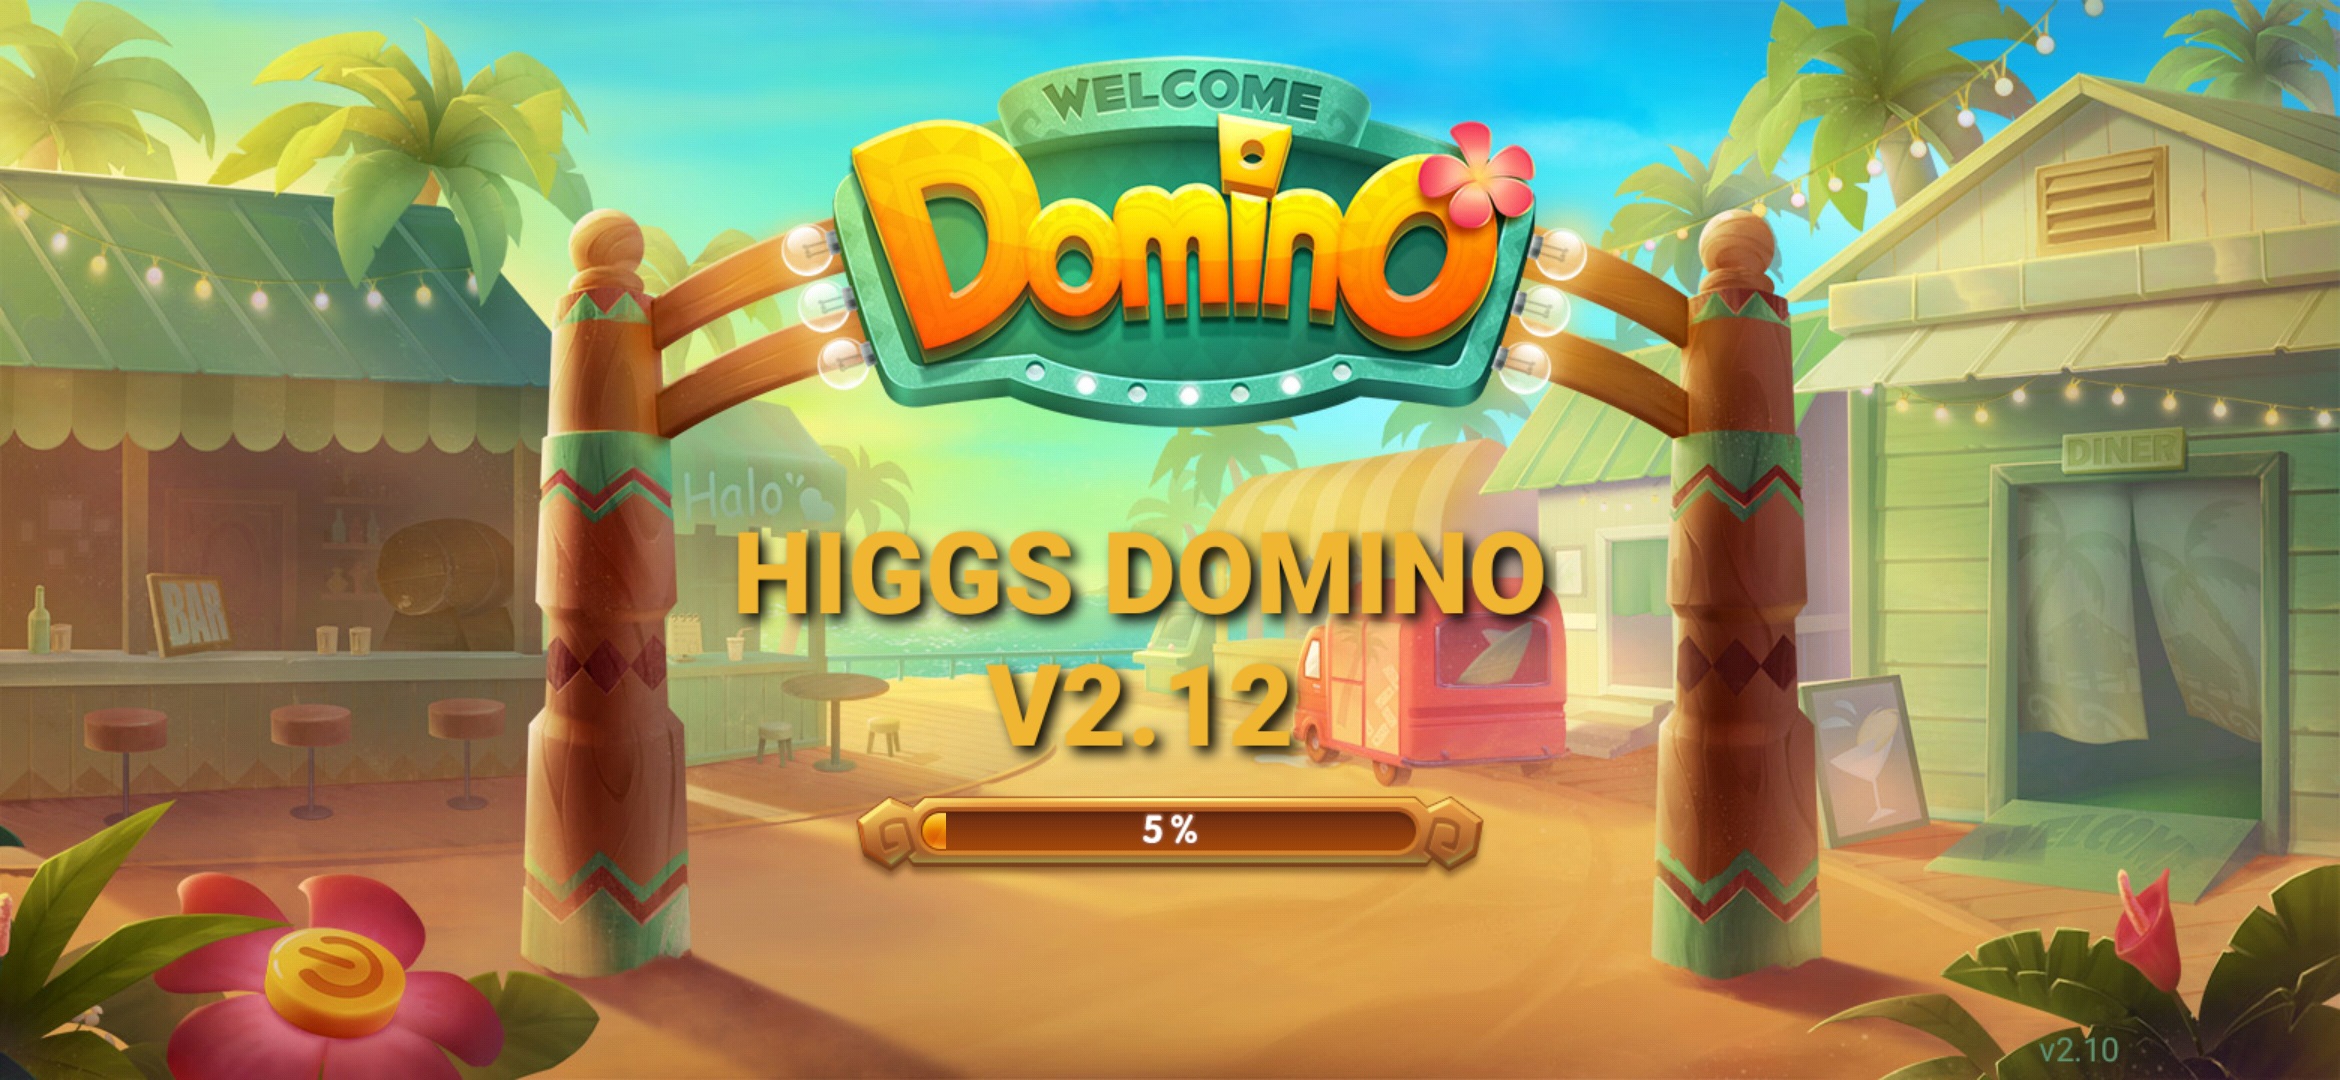 Download Higgs Domino Gummy Bonanza X8 Speeder Versi 2.12…